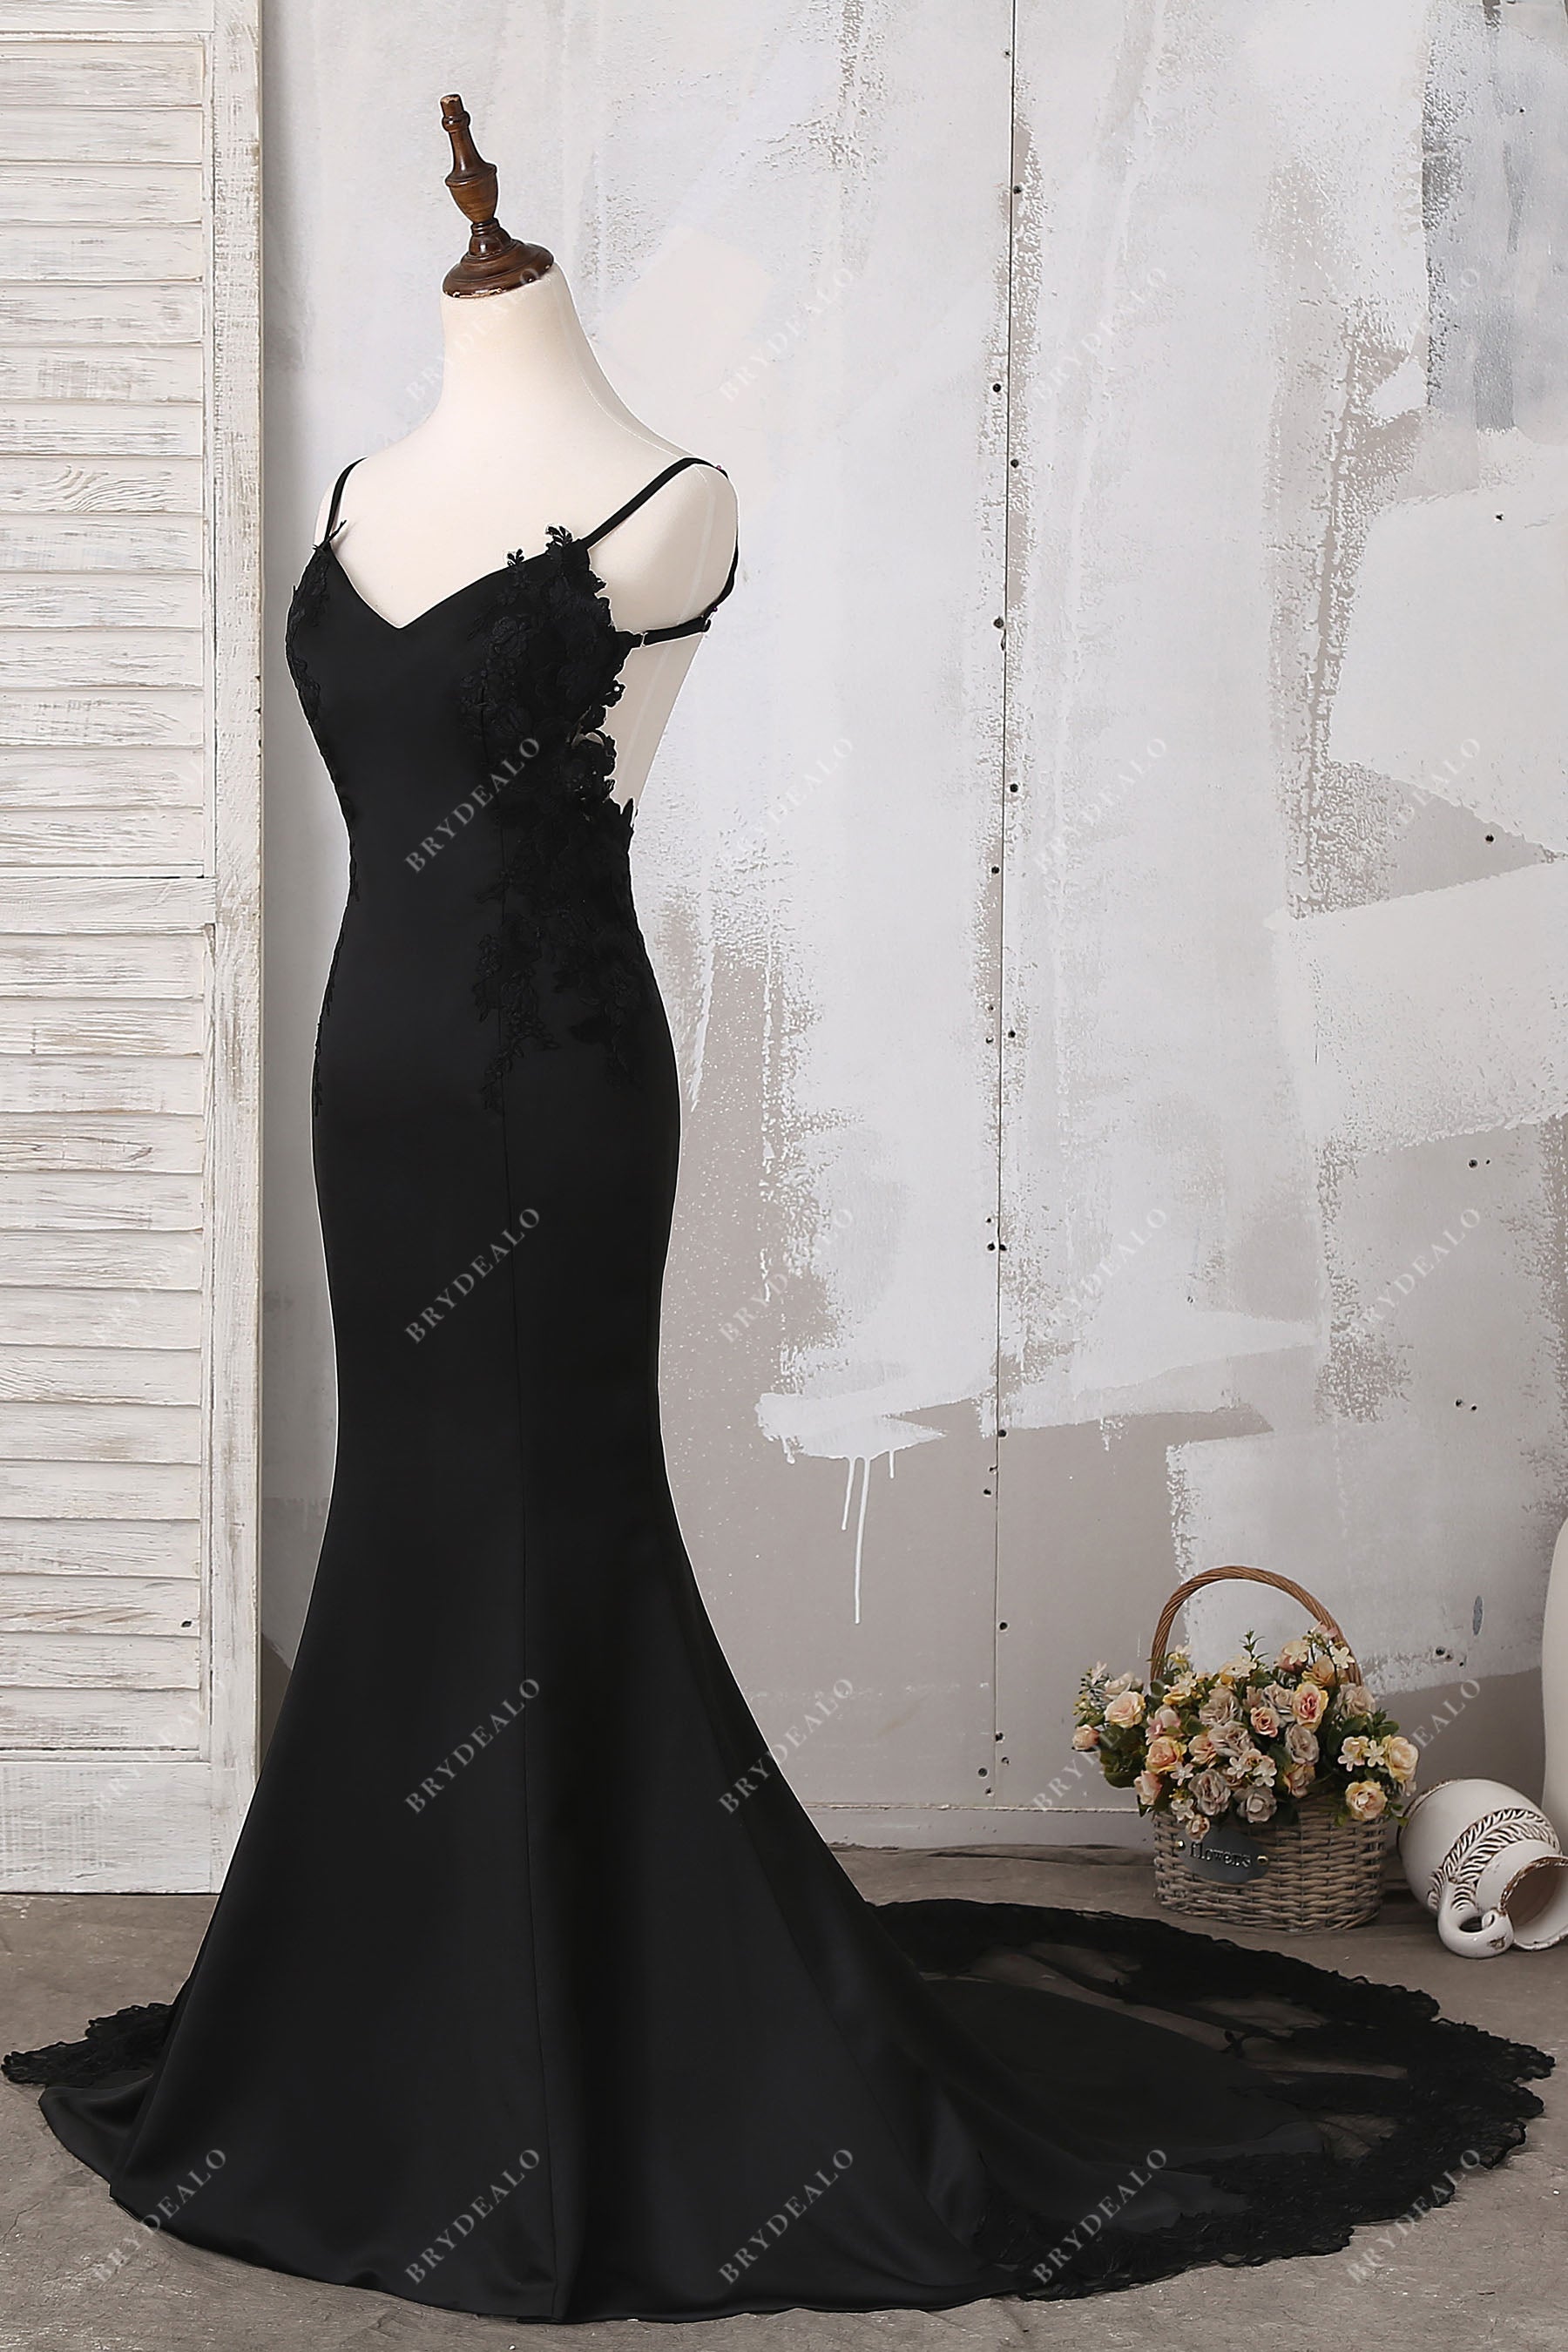 Sleeveless thin straps black mermaid gothic bridal gown